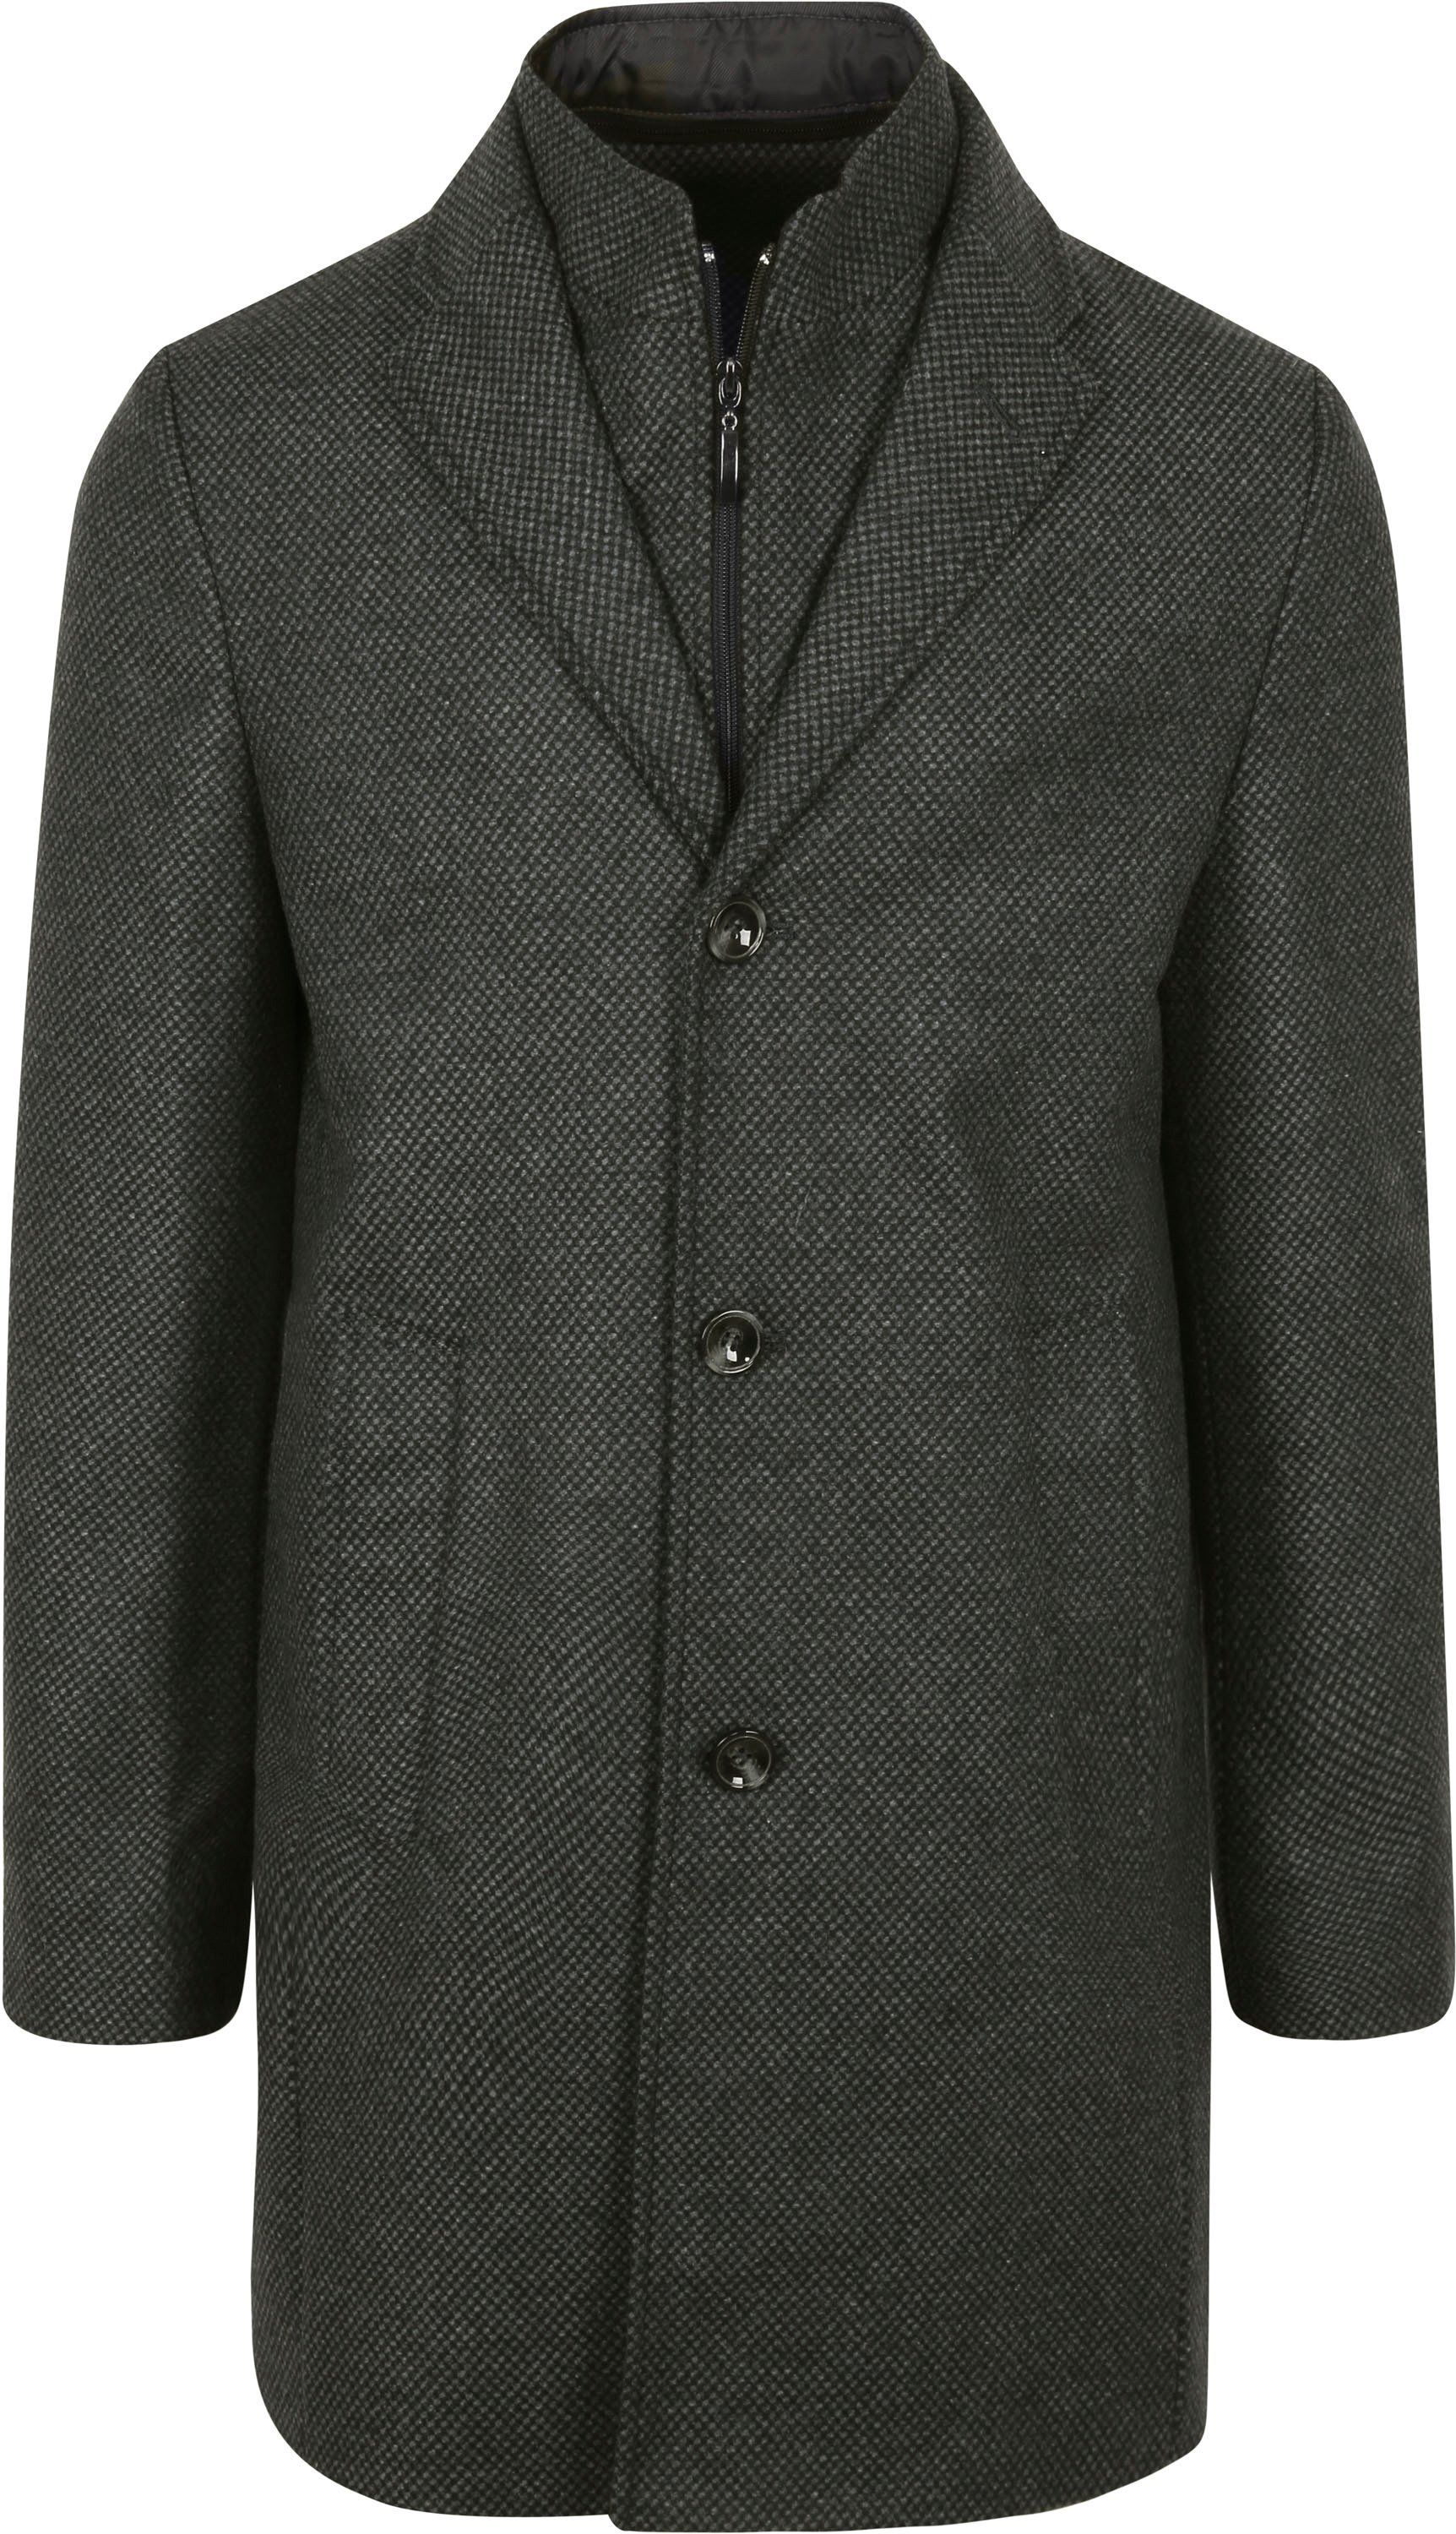 Suitable K150 Coat Plaid Dark Dark Green Green size 38-R